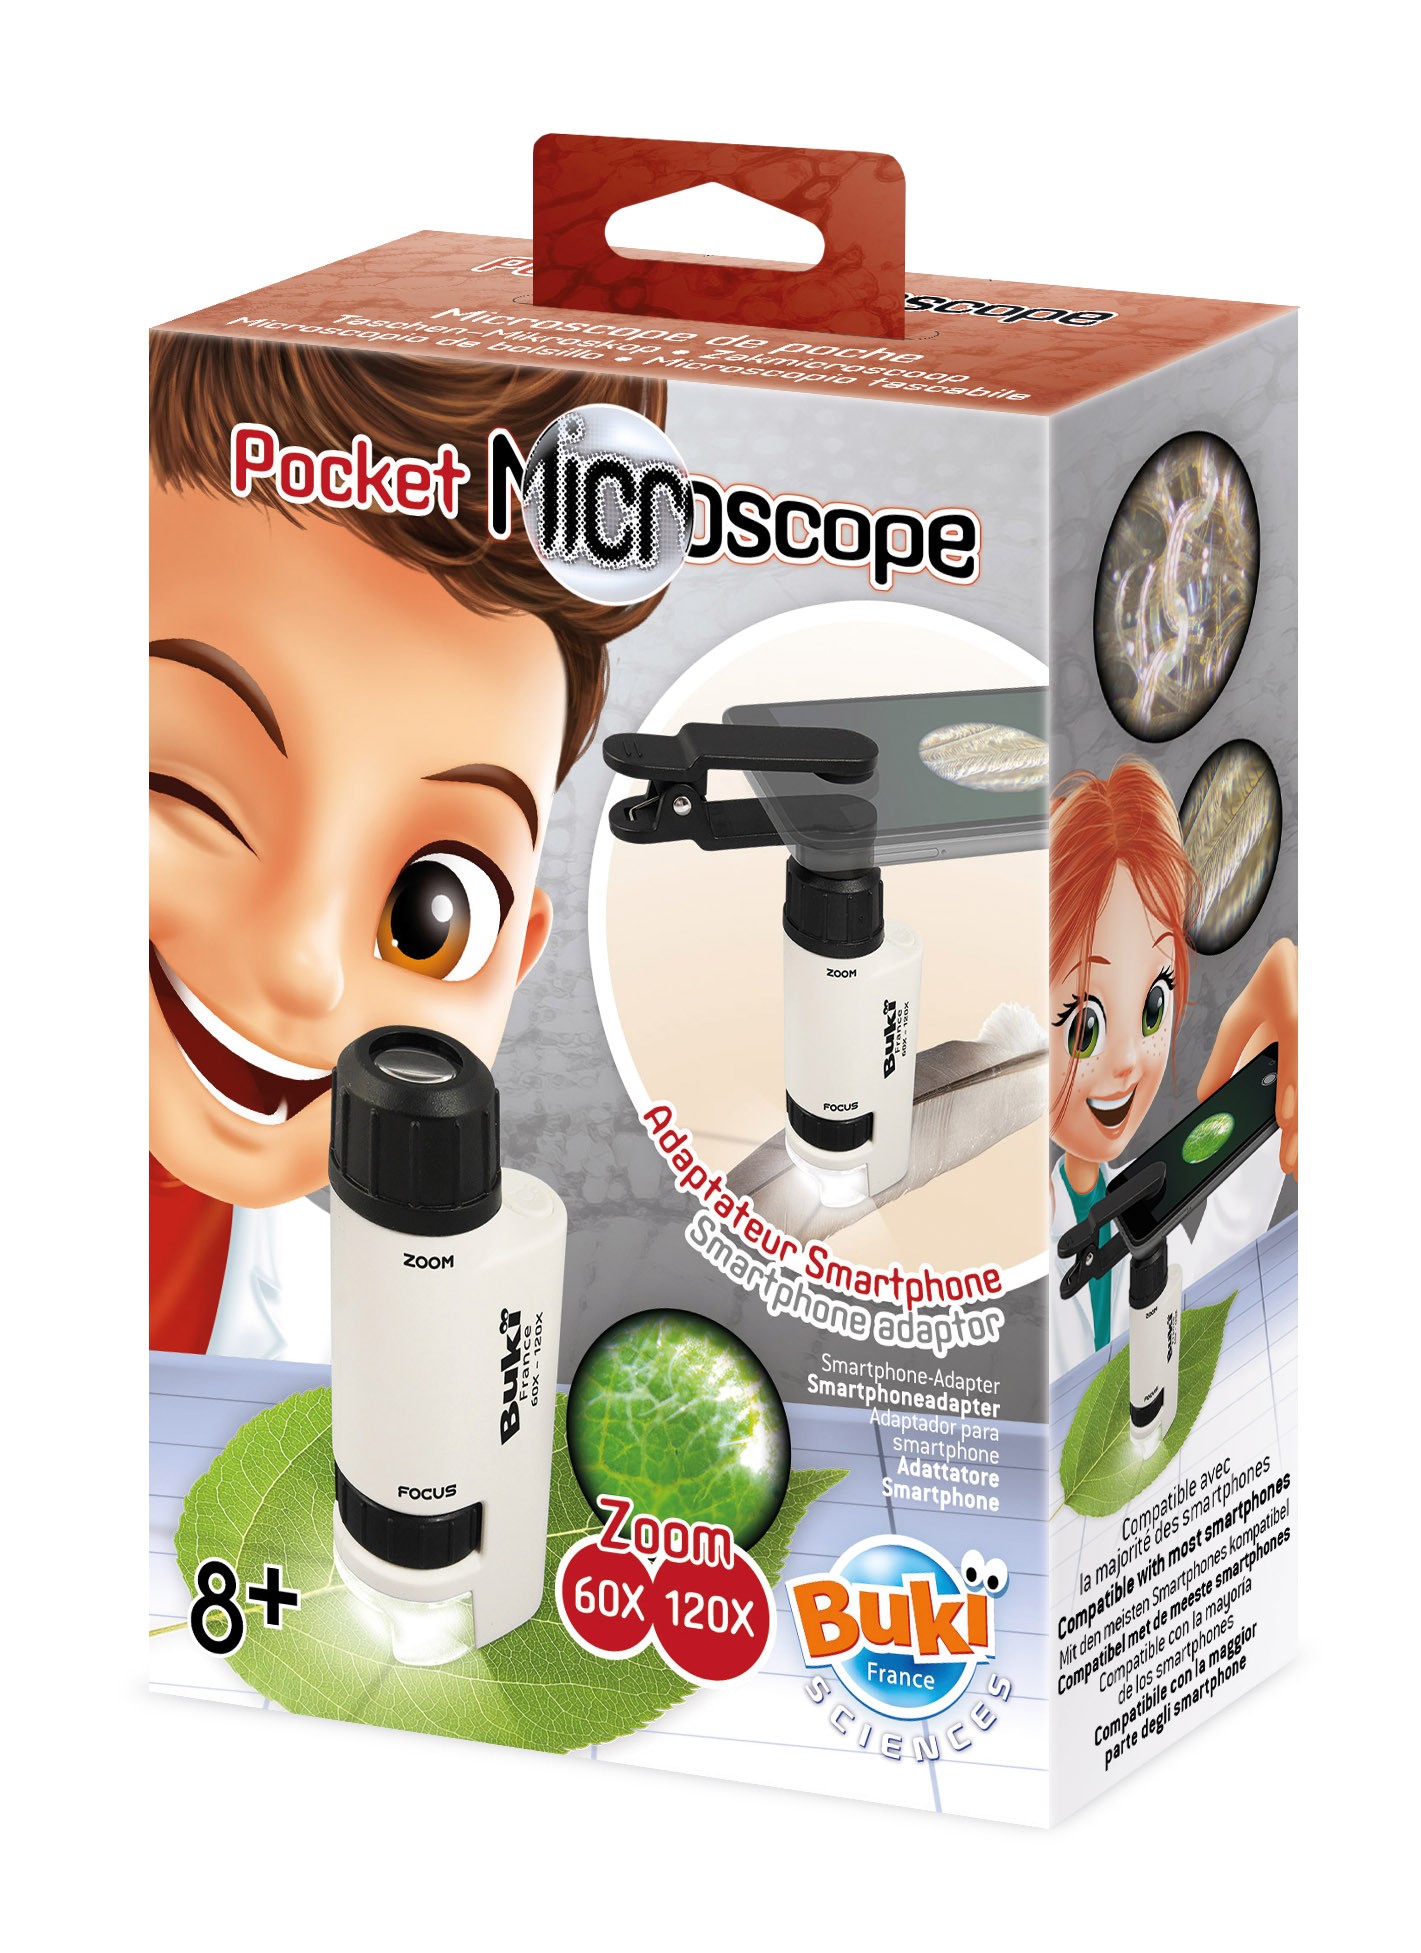 Buki France-Pocket Microscope